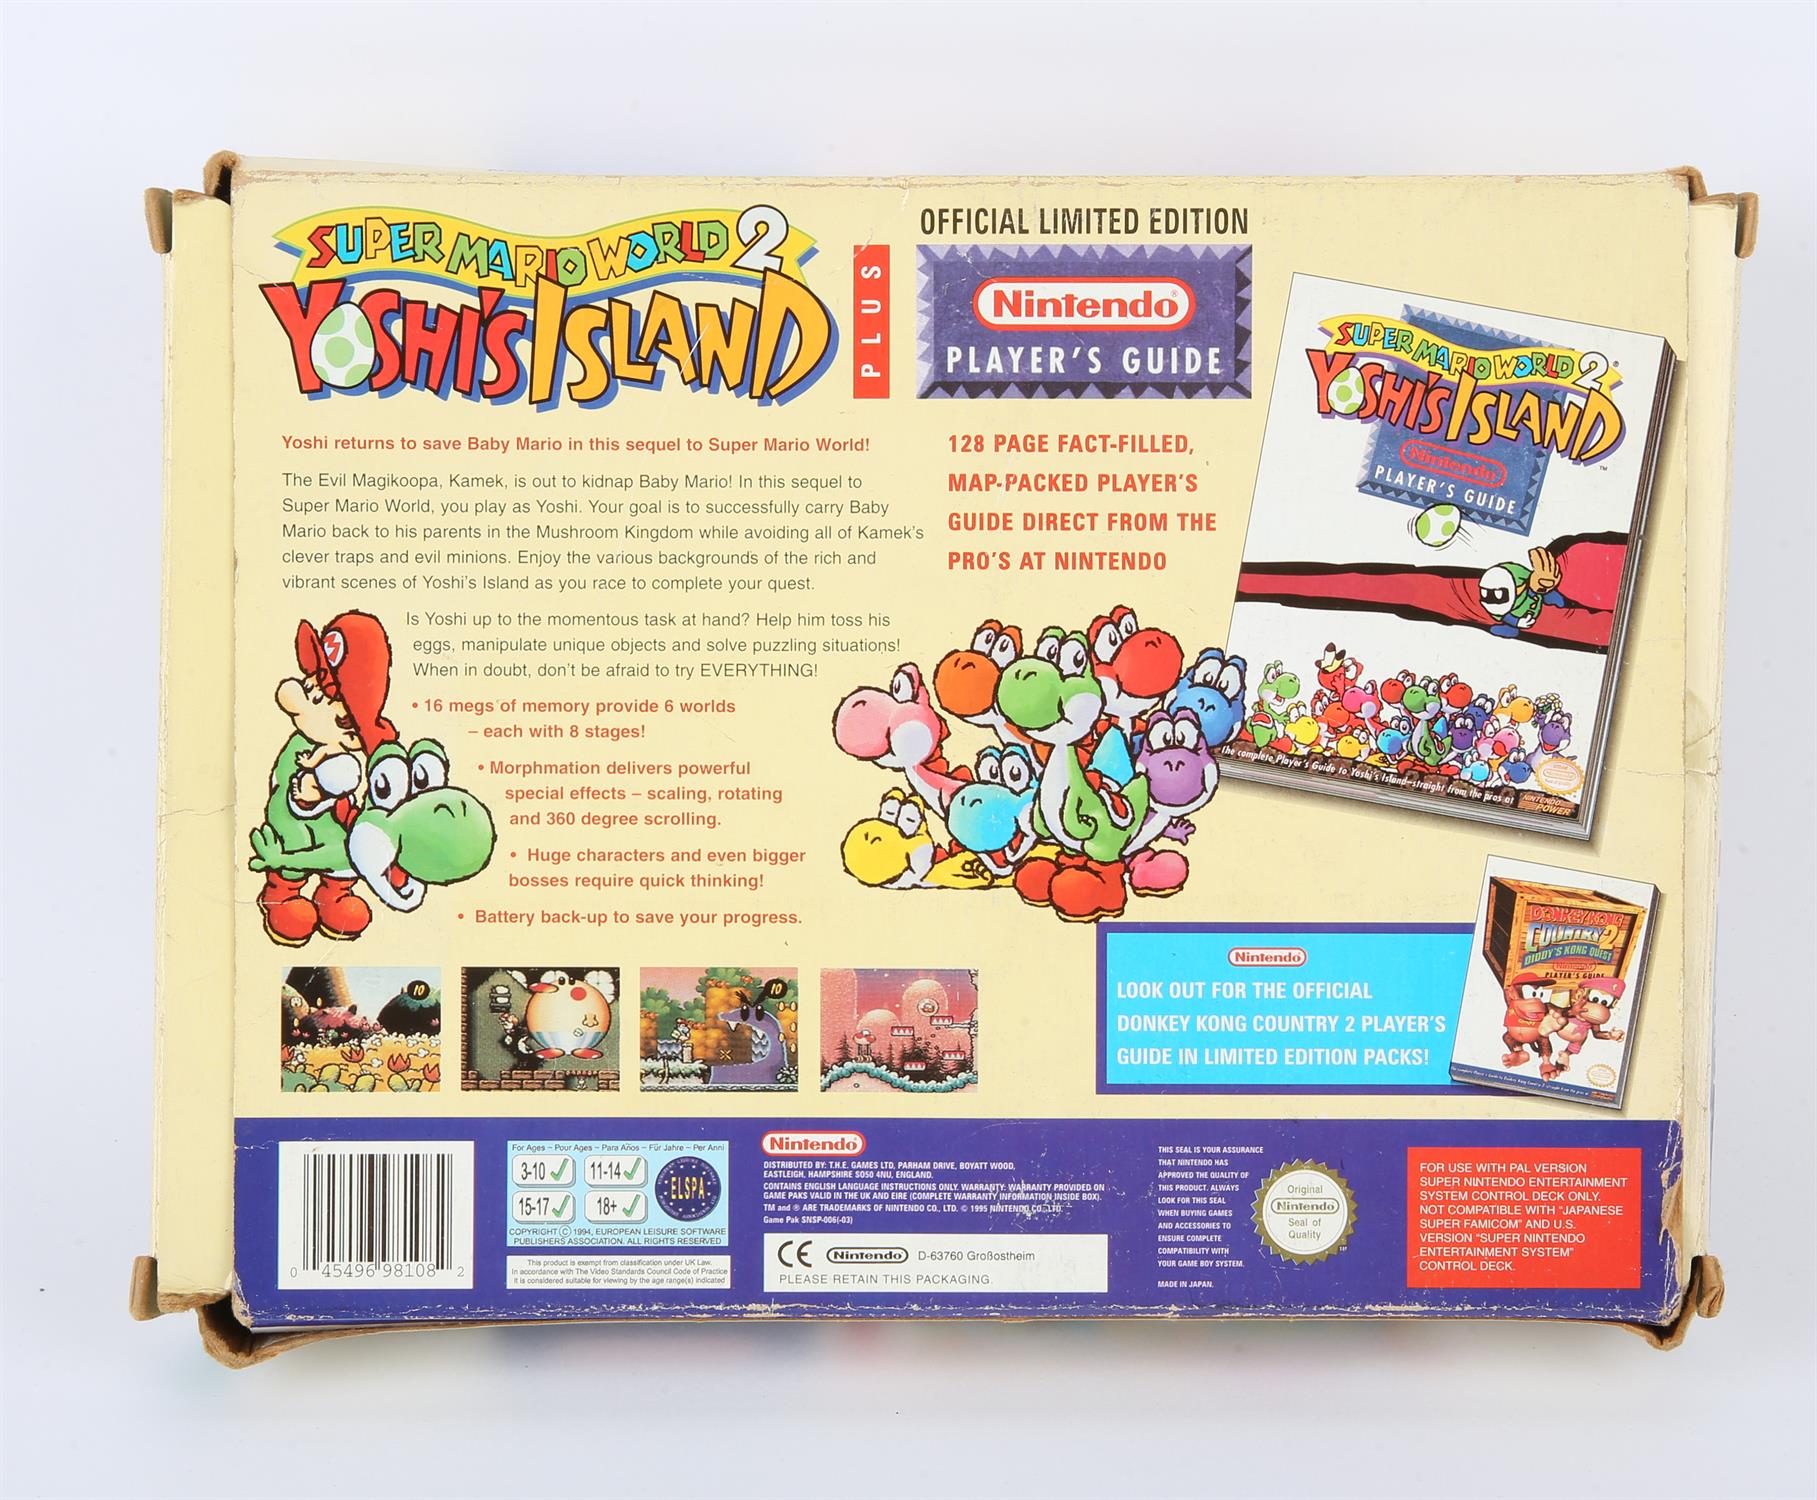 Yoshi's Island Limited Ed. 'Big Box' [w/Strategy Guide] (PAL) - Image 2 of 2